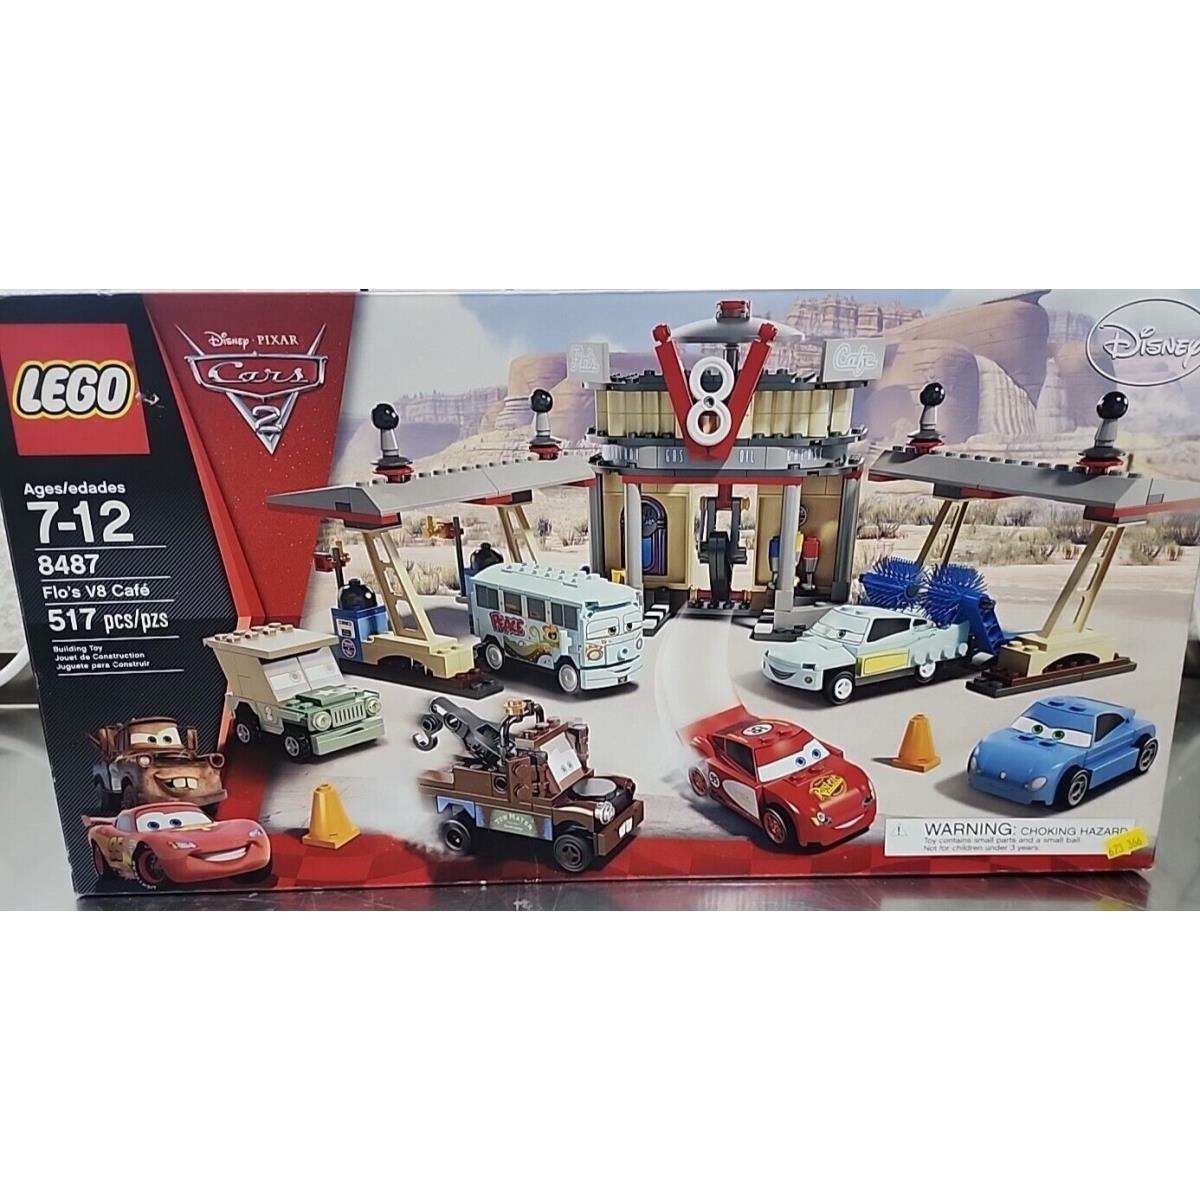 Lego Cars: Flo`s V8 Cafe 8487